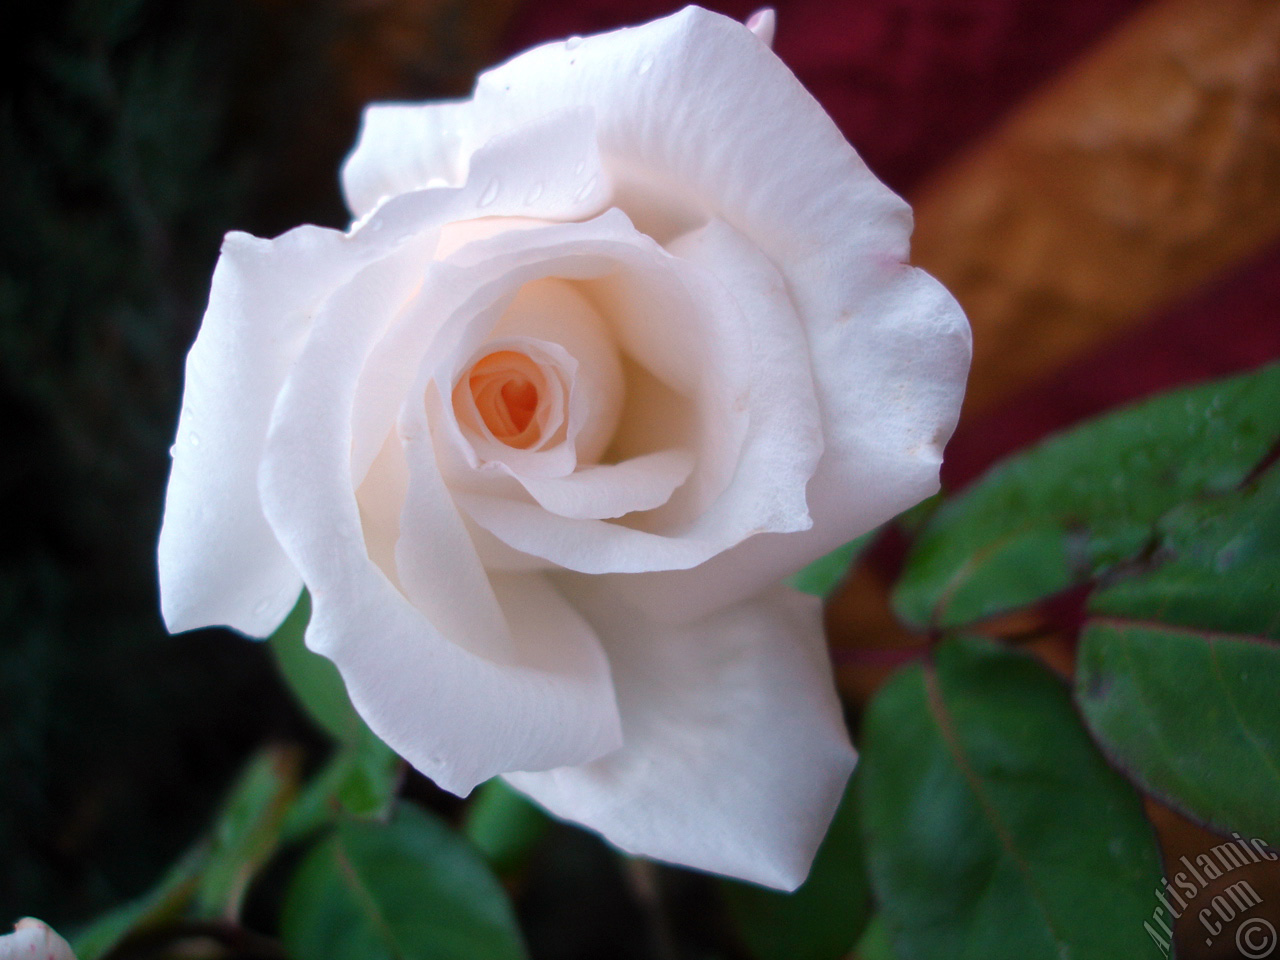 White rose photo.
